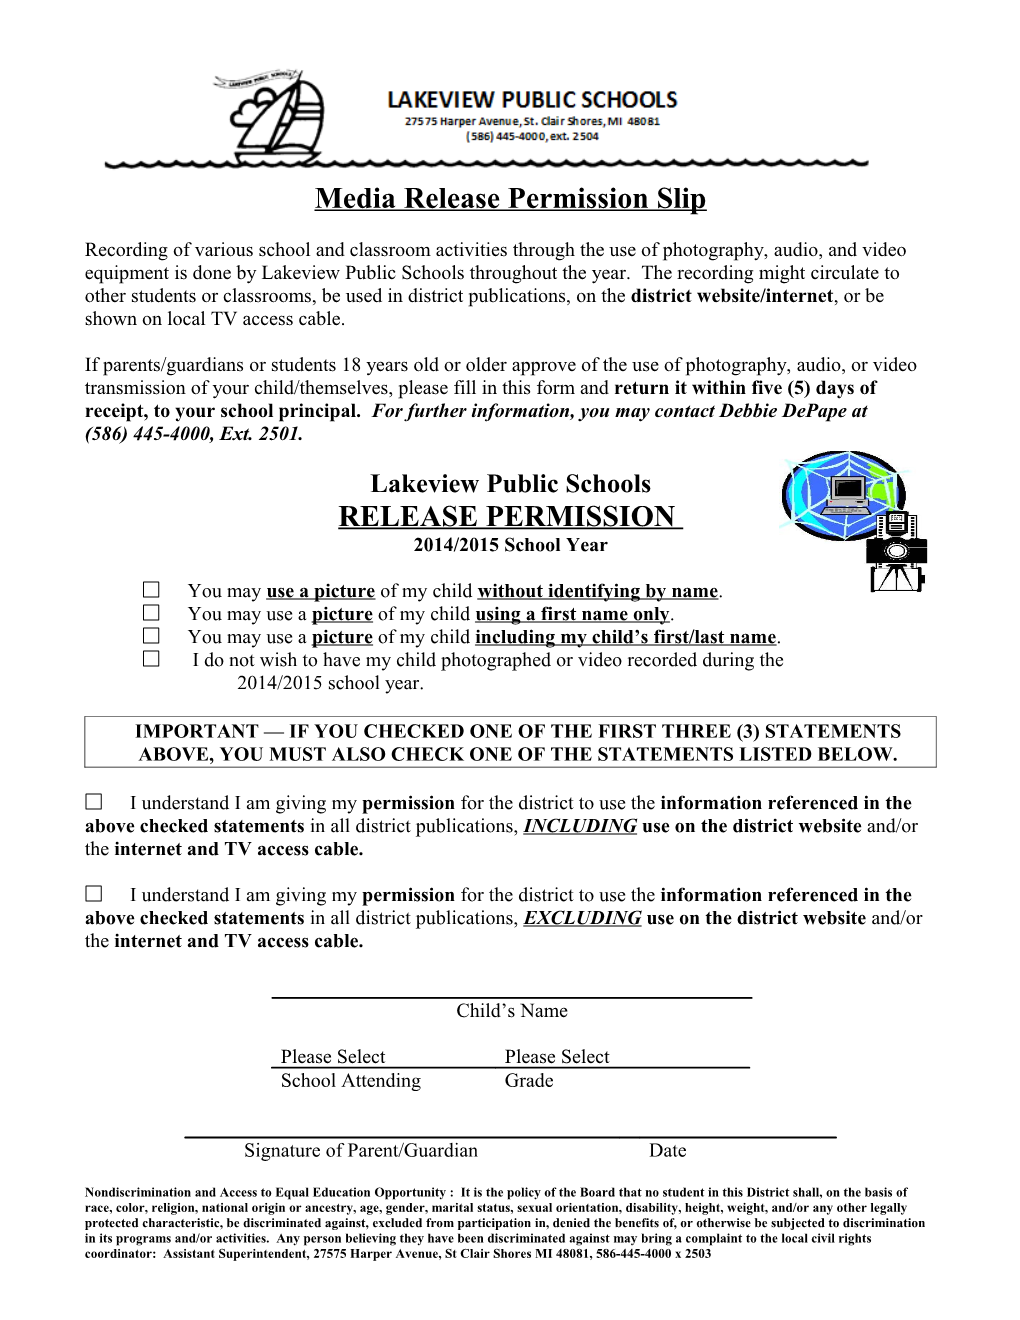 Media Release PERMISSION SLIP 0708